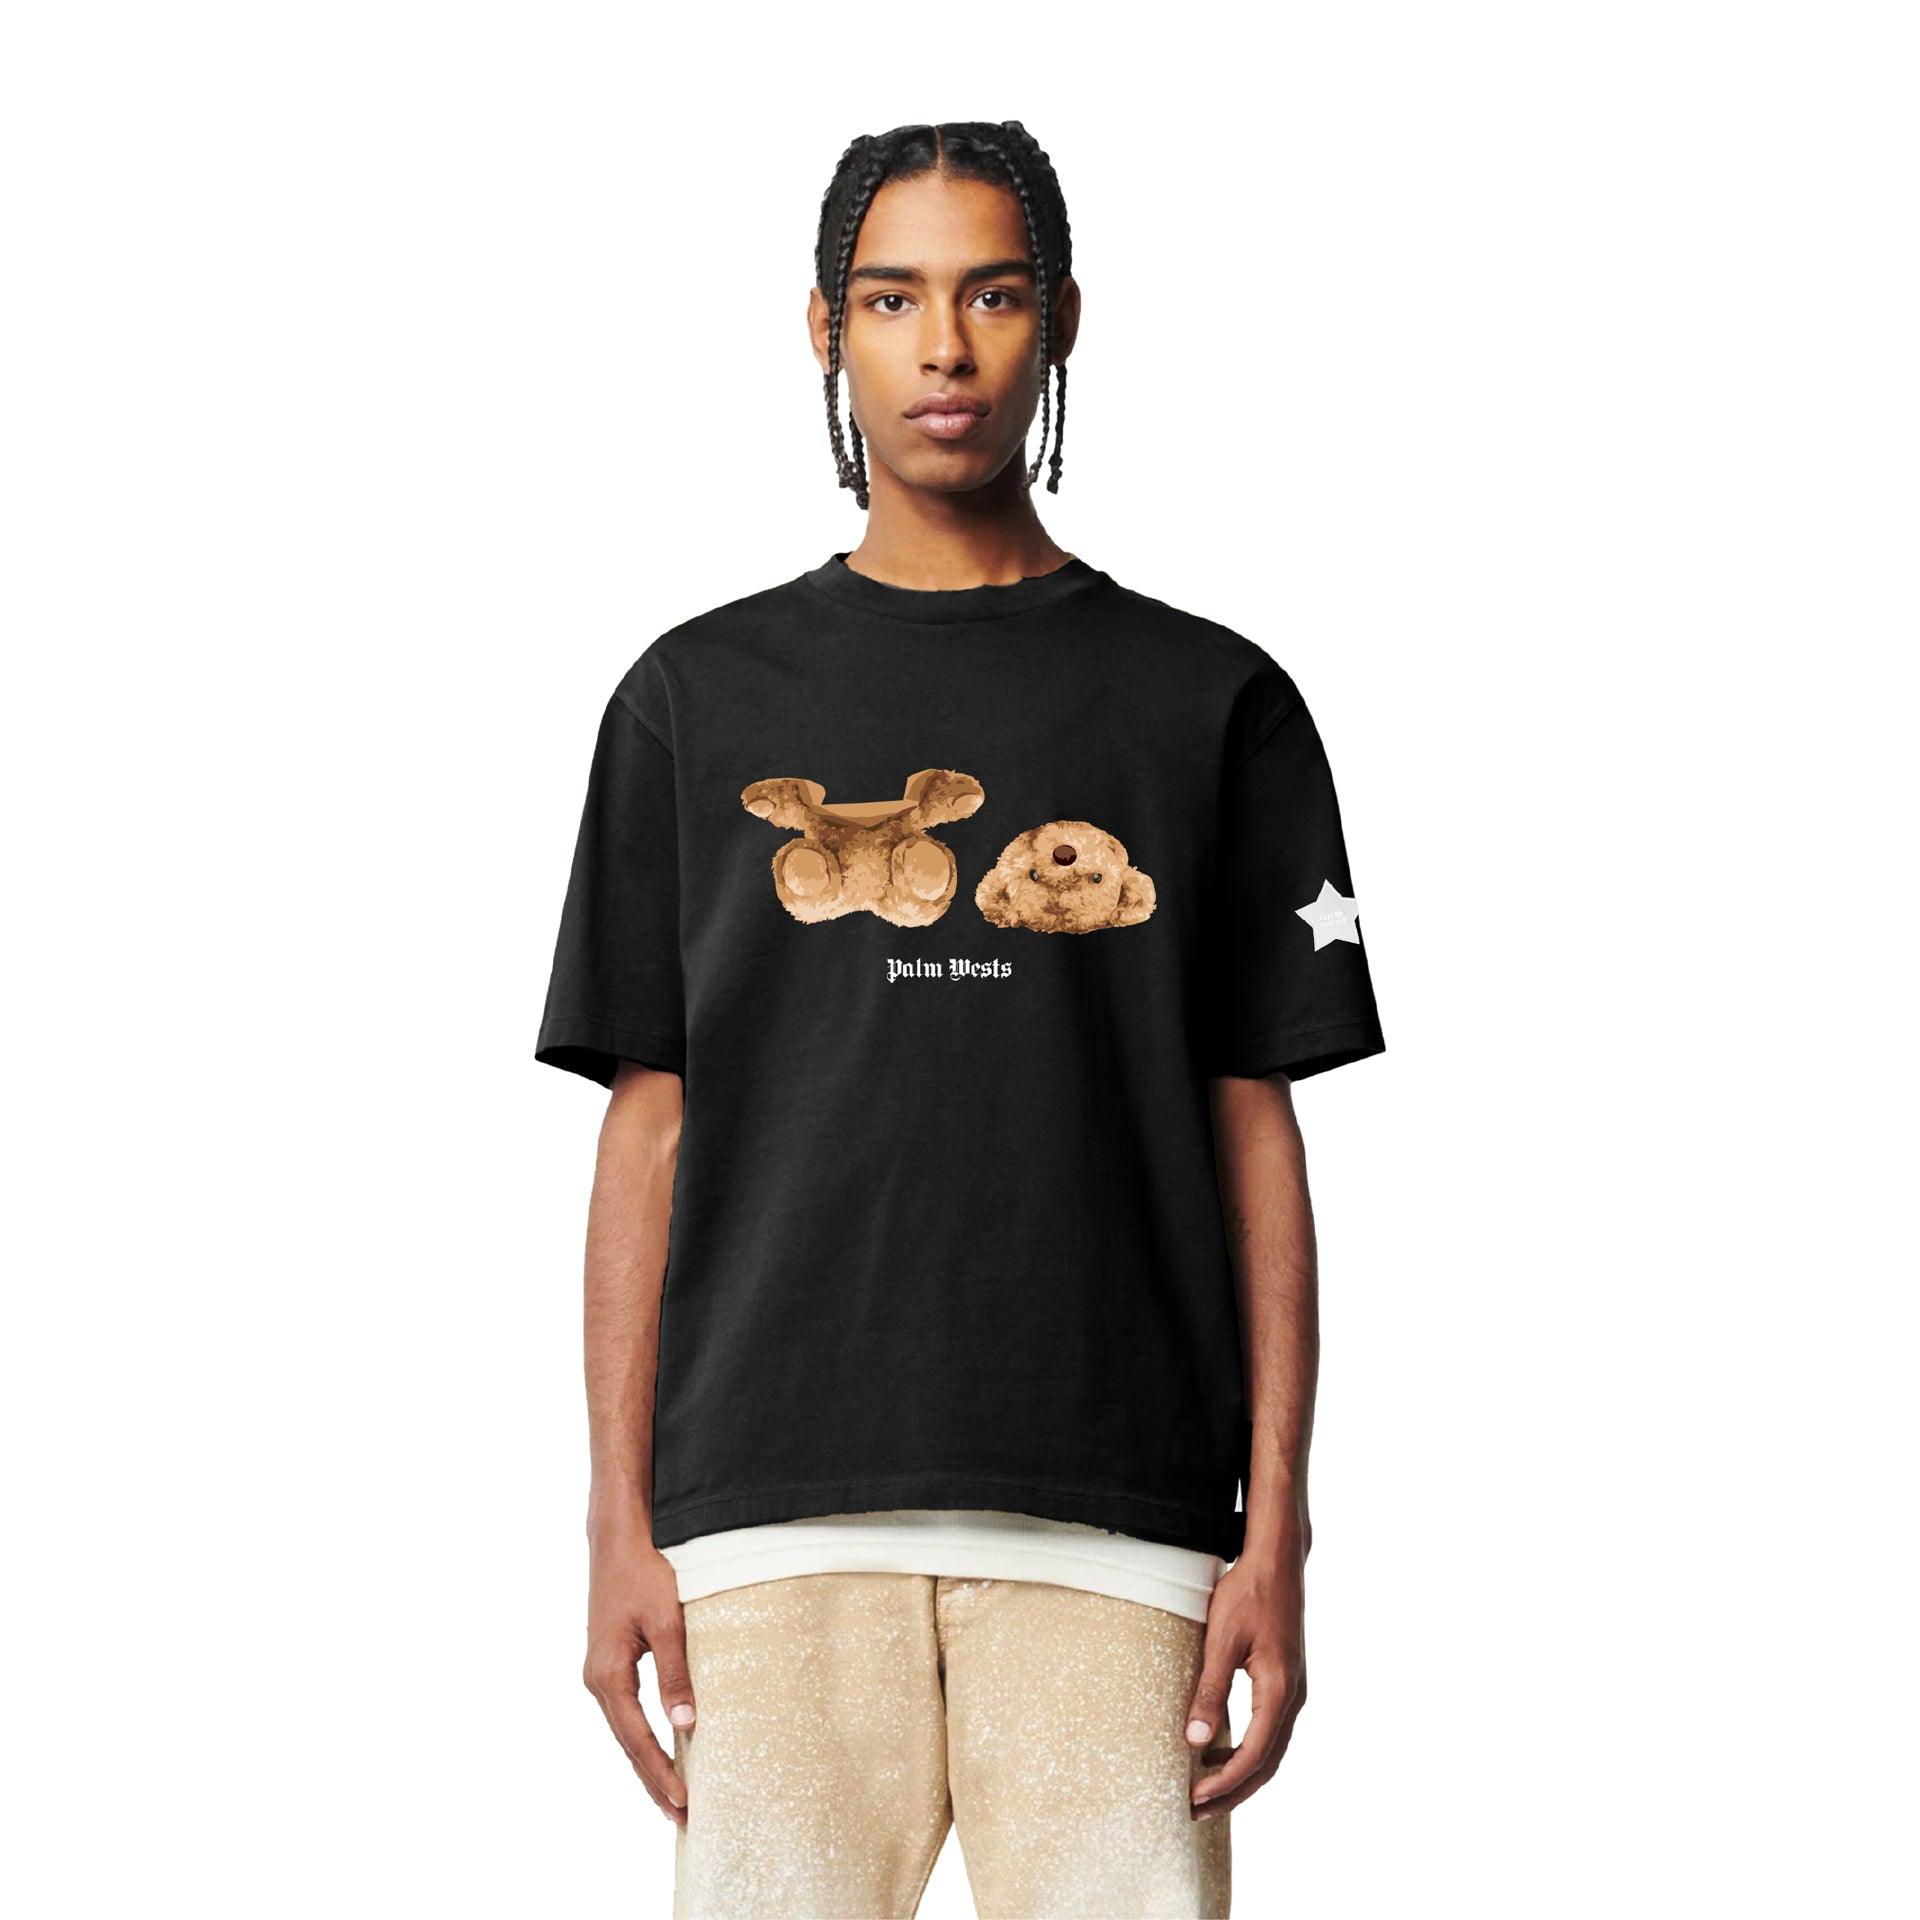 Black Teddy Bear T-shirt From I'm West - WECRE8